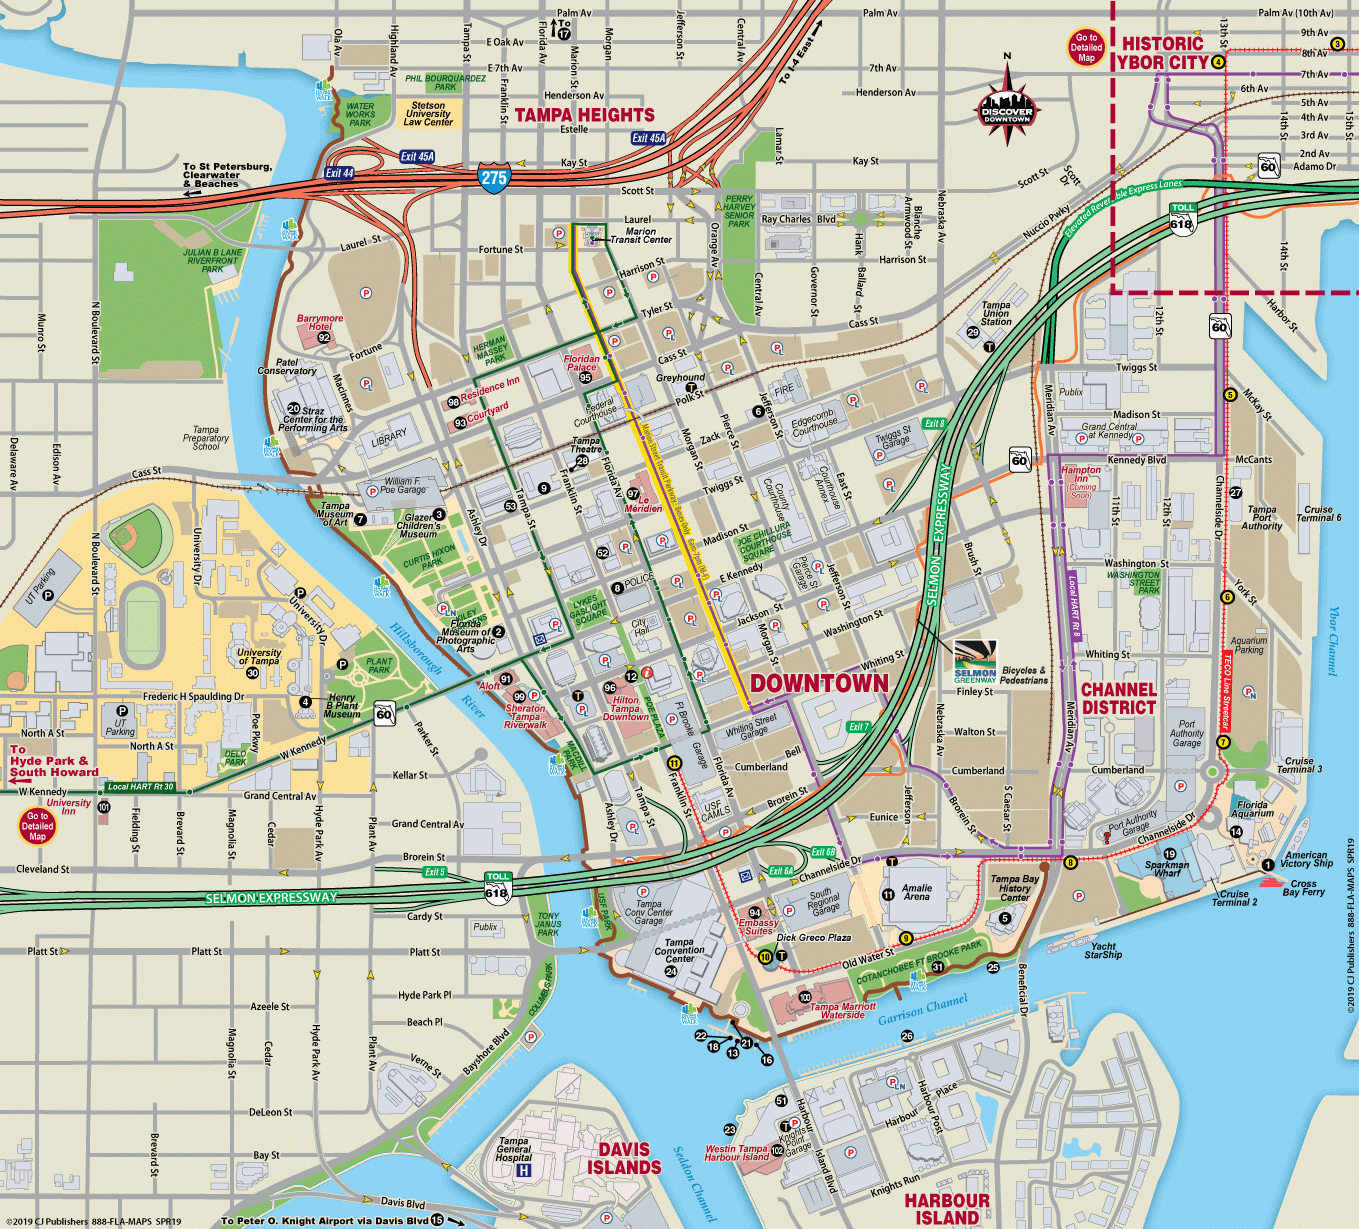 Map Of Downtown Tampa - Interactive Downtown Tampa Florida Map - Tampa Florida Airport Hotels Map